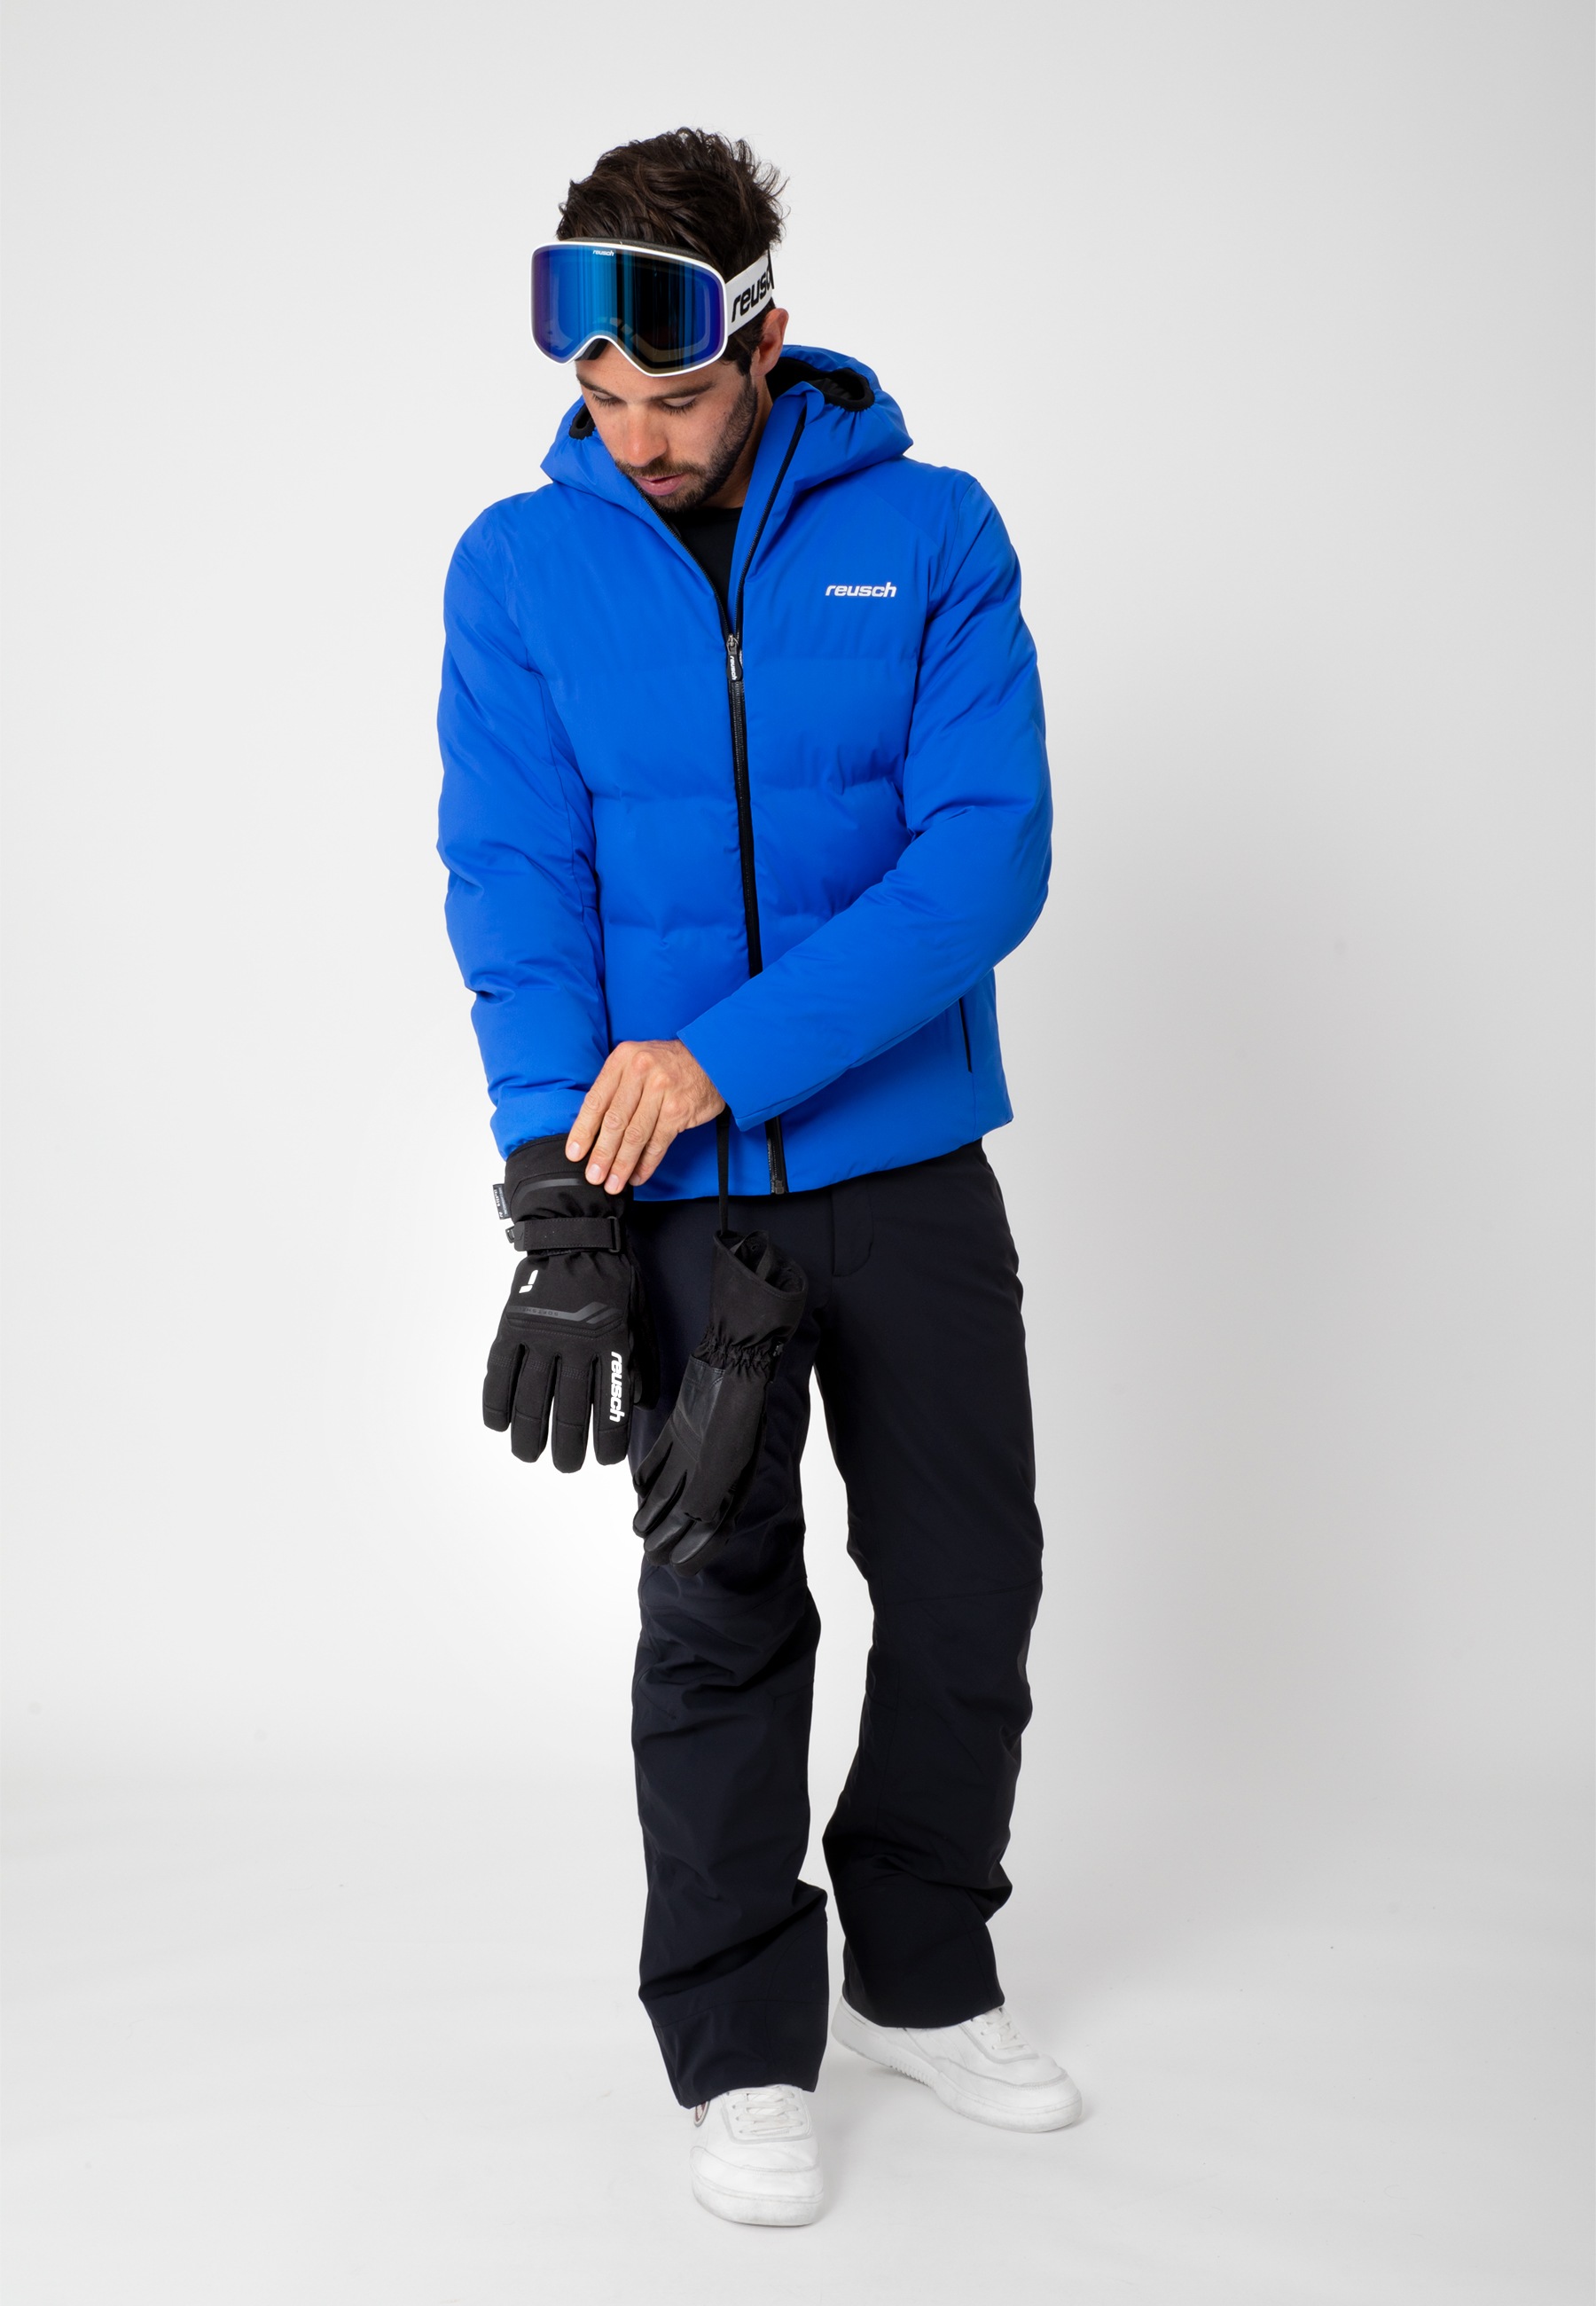 Reusch Skihandschuhe »Primus warm,wasserdicht,atmungsaktiv BAUR | R-TEX® XT«, sehr